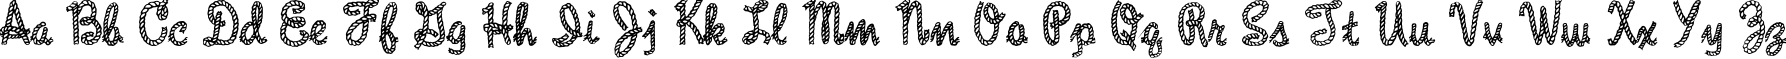 Пример написания английского алфавита шрифтом Reeperbahn